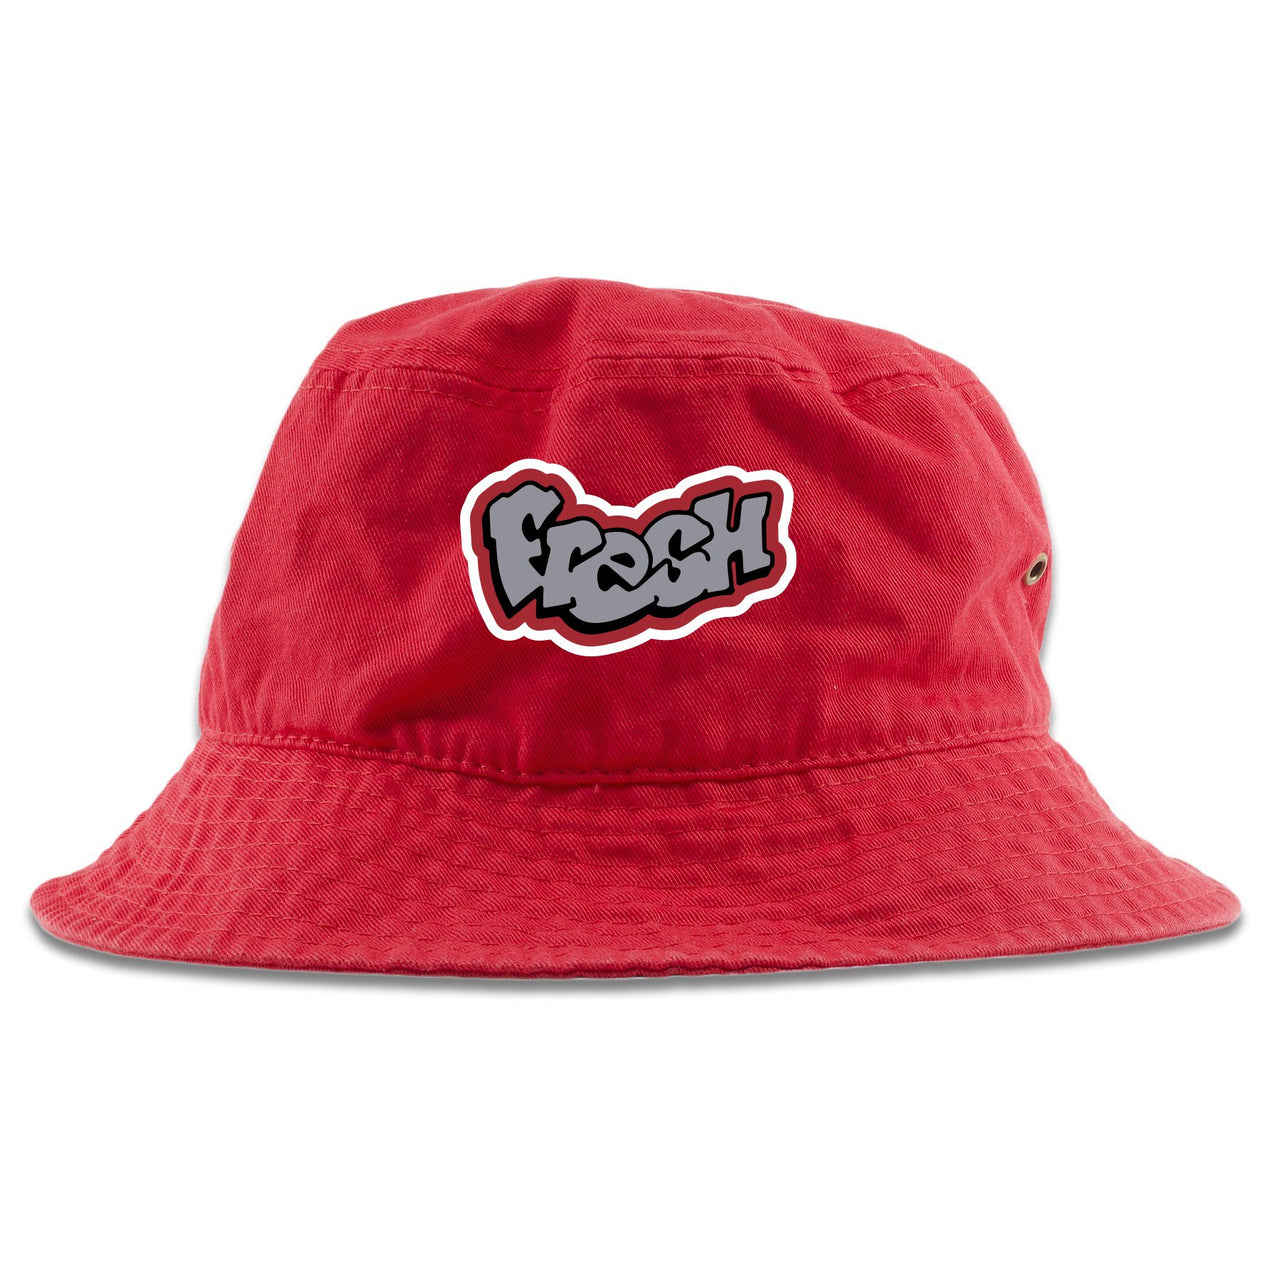 Bred 2019 4s Bucket Hat | Fresh Logo, Red